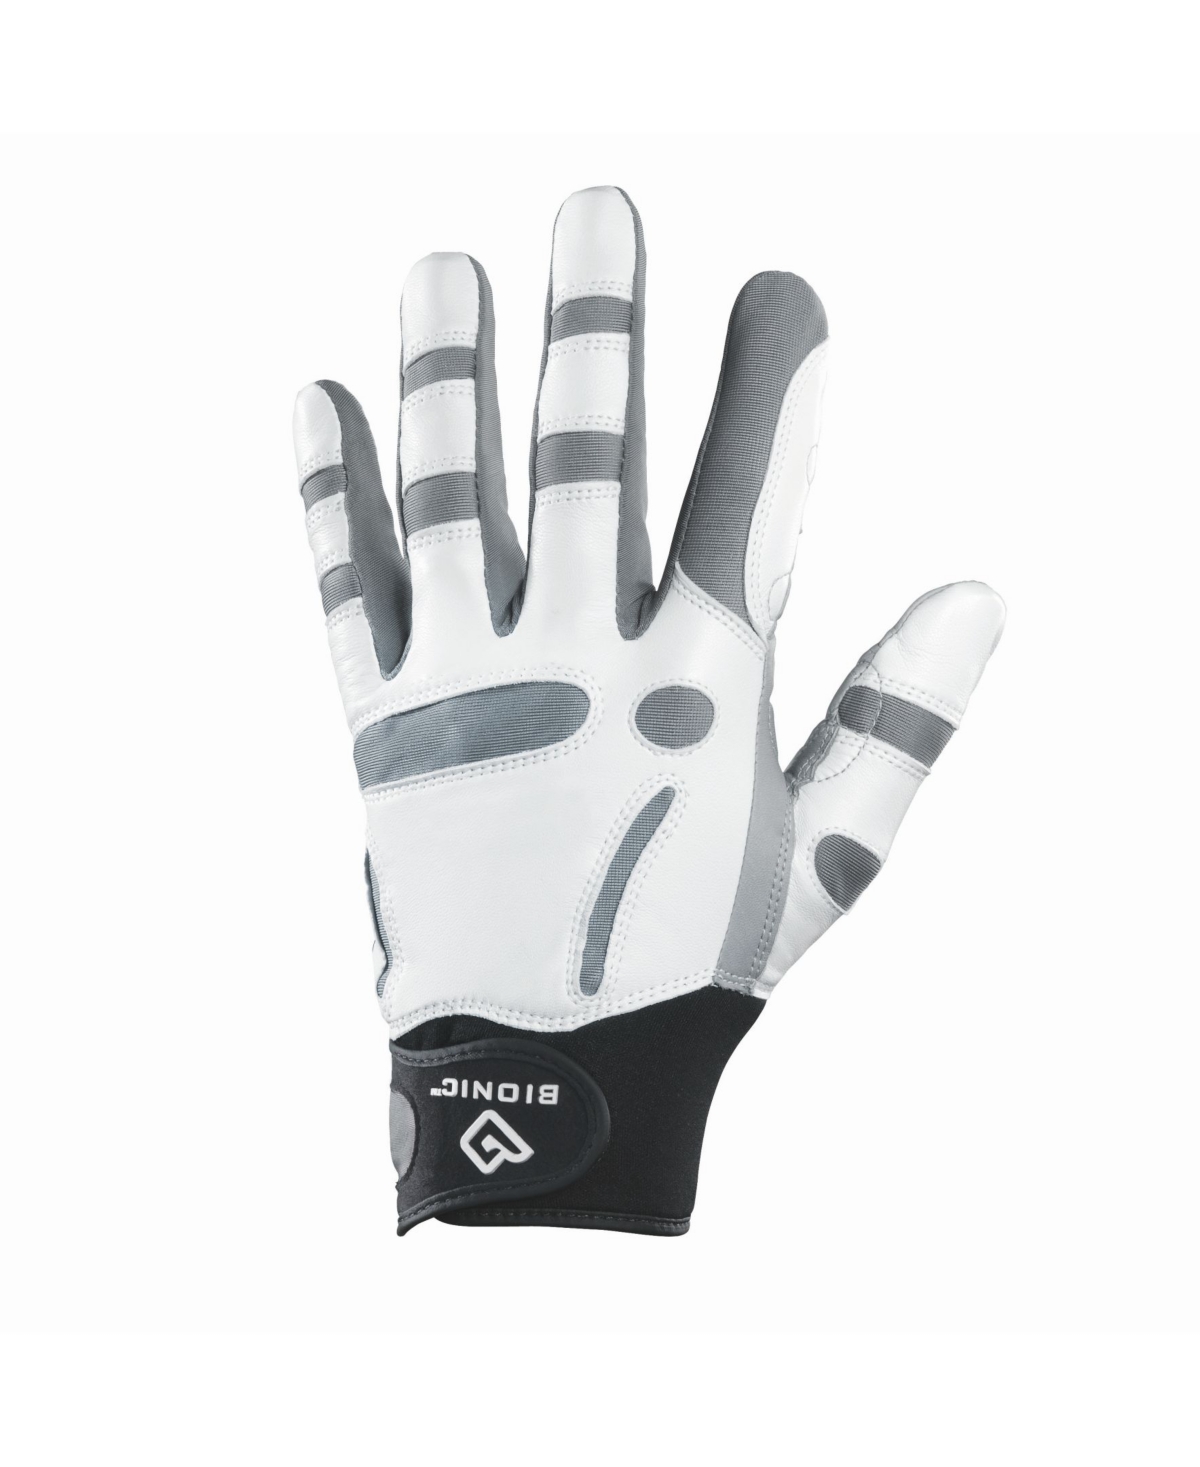 Men's Performance Grip Pro Golf Glove - Left Hand - Silver